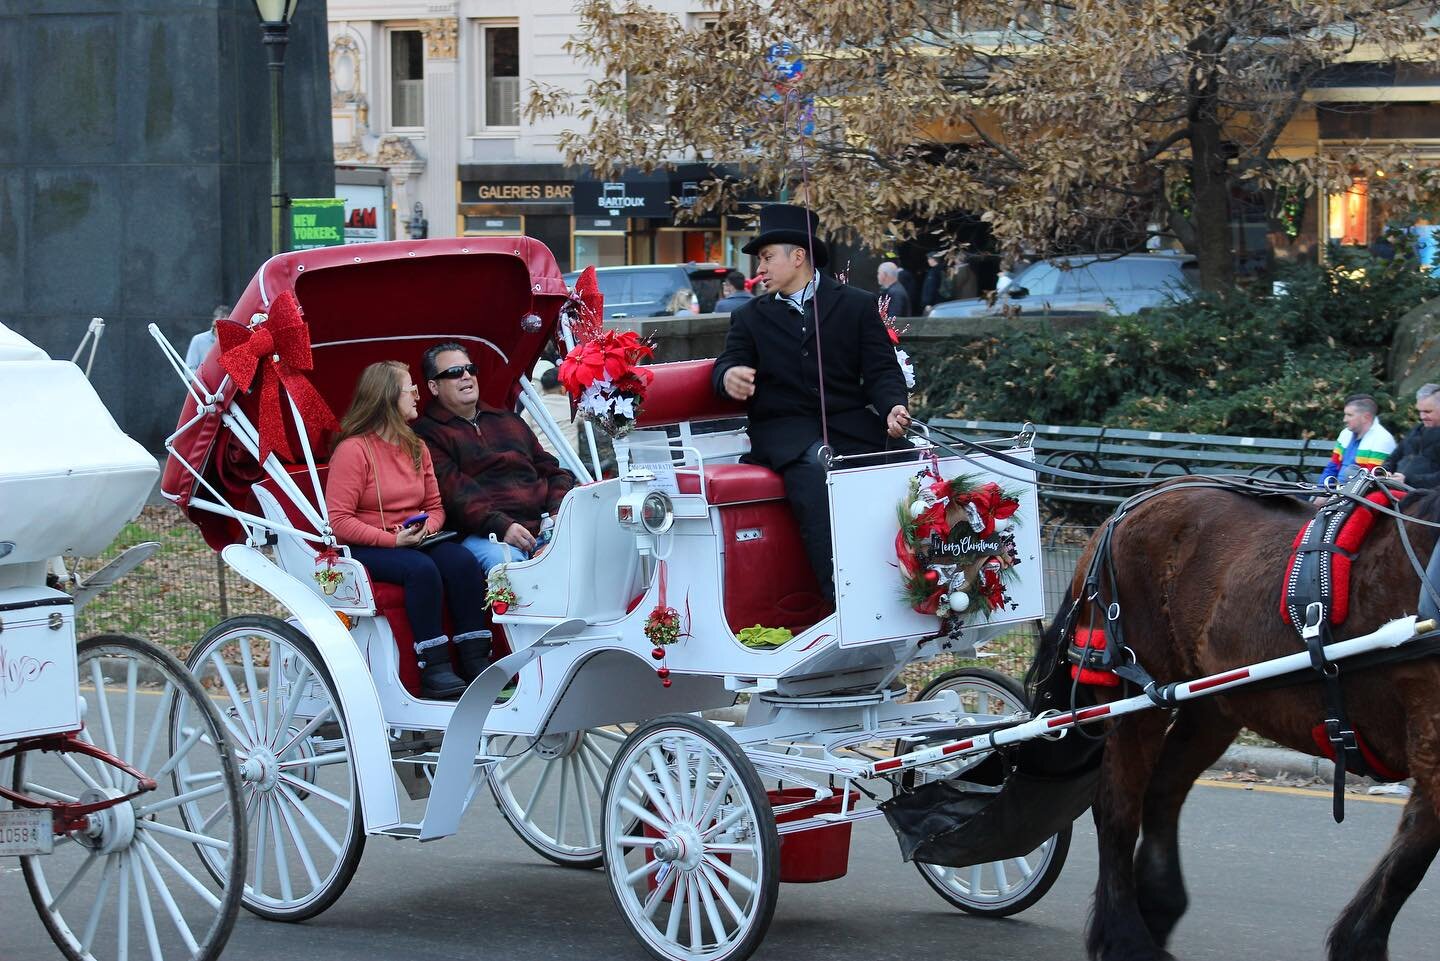 ❄️ Horse carriage rides through the winter wonderland of New York City. 

#CentralPark #NewYork #NewYorker #NewYorkCity #NewYorkLocals #Horses #HorseRiding #HorseAndCarriageRide #HorseAndCarriage #Manhattan #NewYorkTourist #ExploreCentralPark #Centra